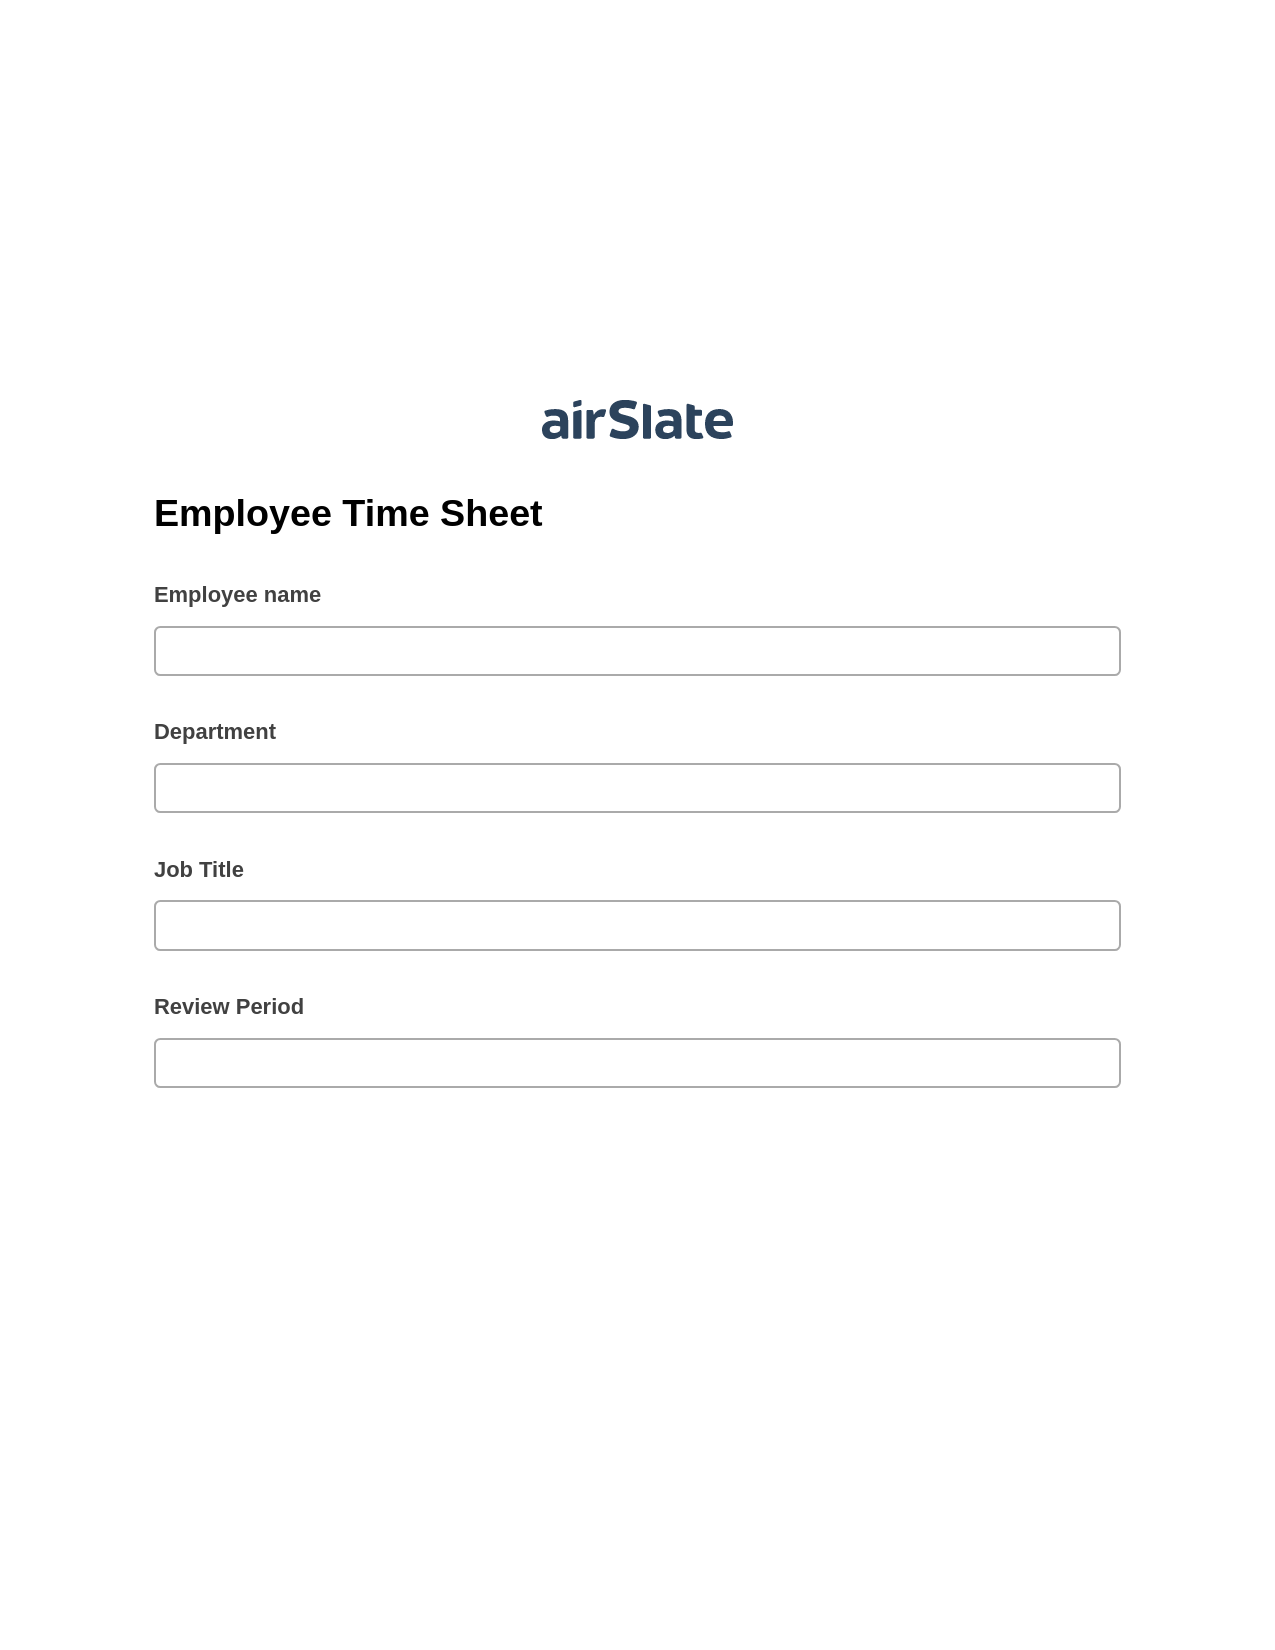 Multirole Employee Time Sheet Pre-fill from CSV File Bot, Lock the Slate Bot, Webhook Postfinish Bot